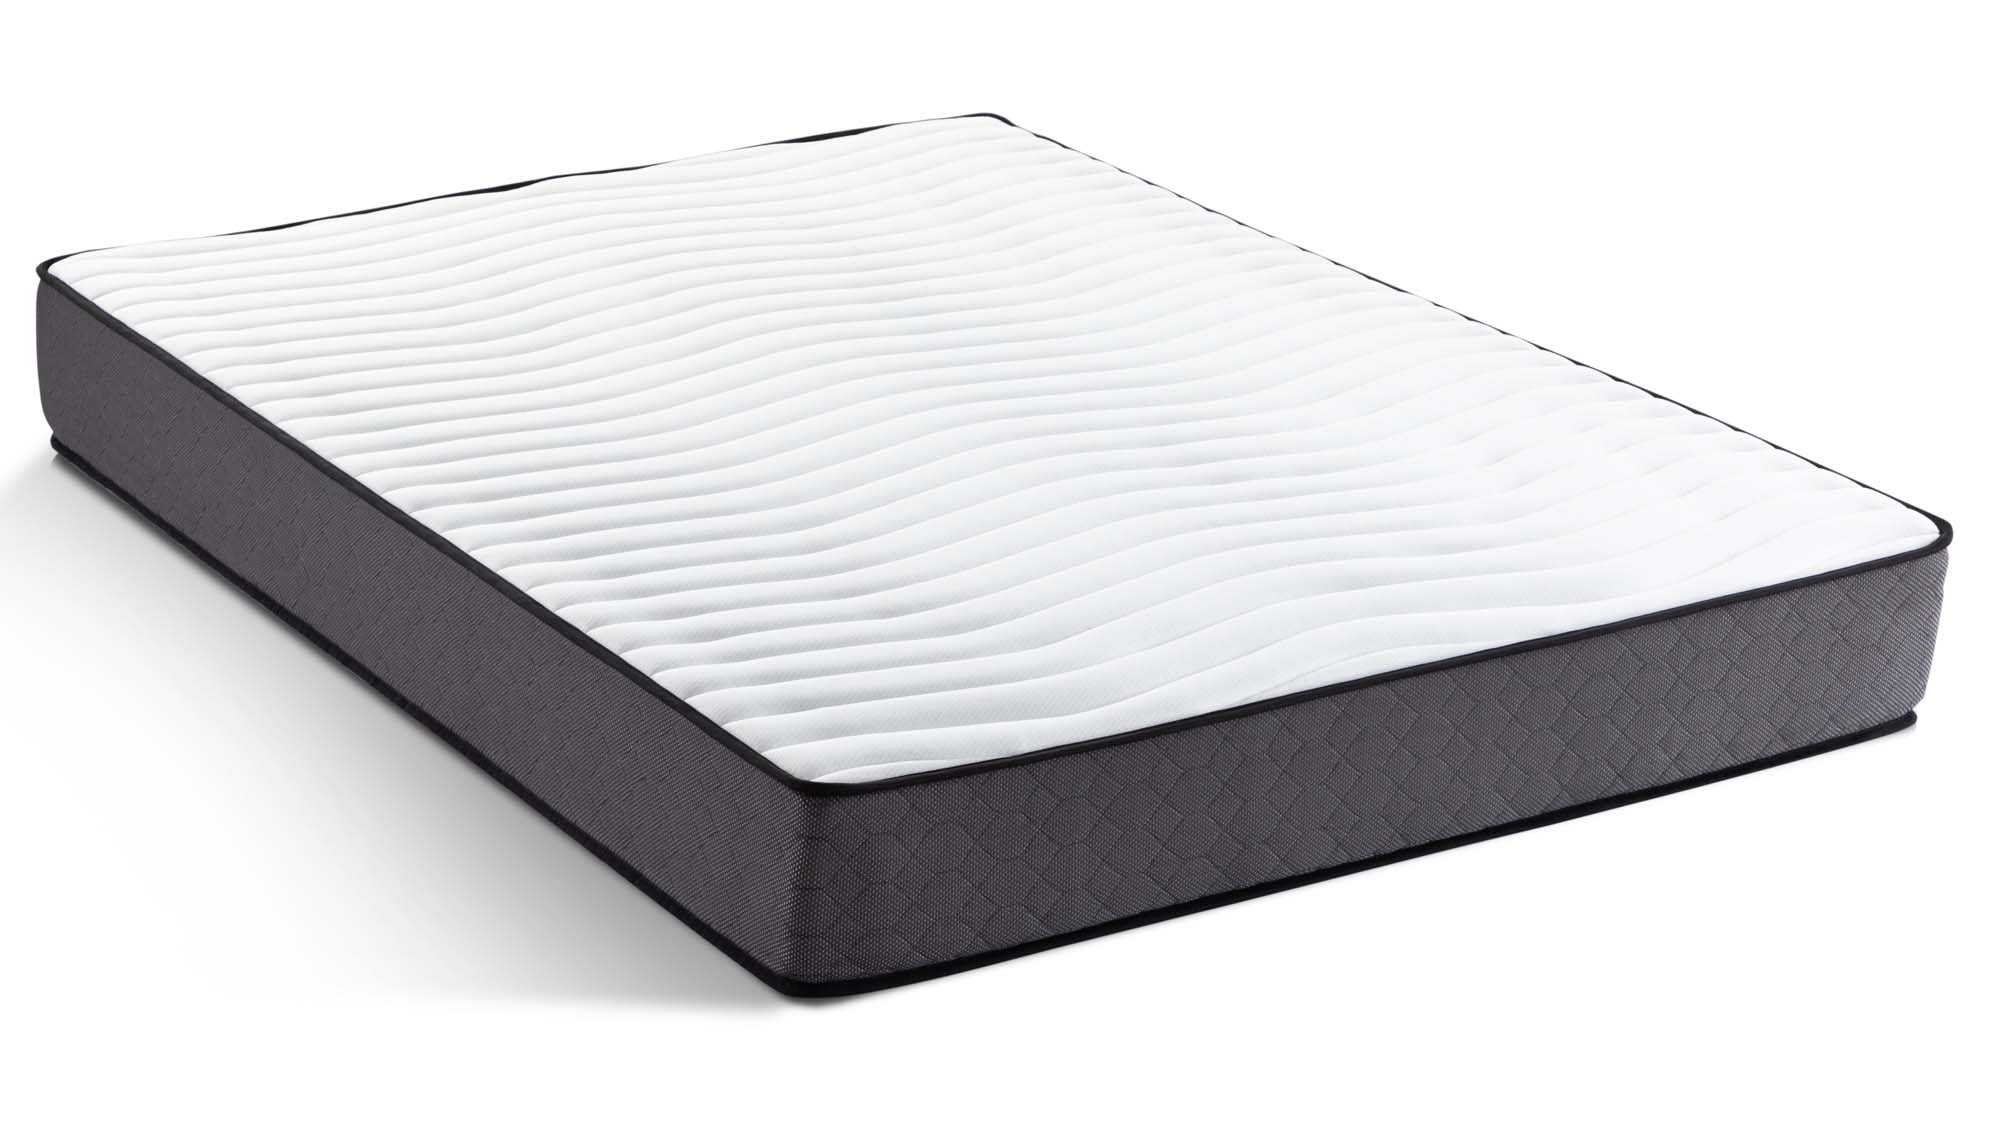 weekender 10 inch hybrid mattress review